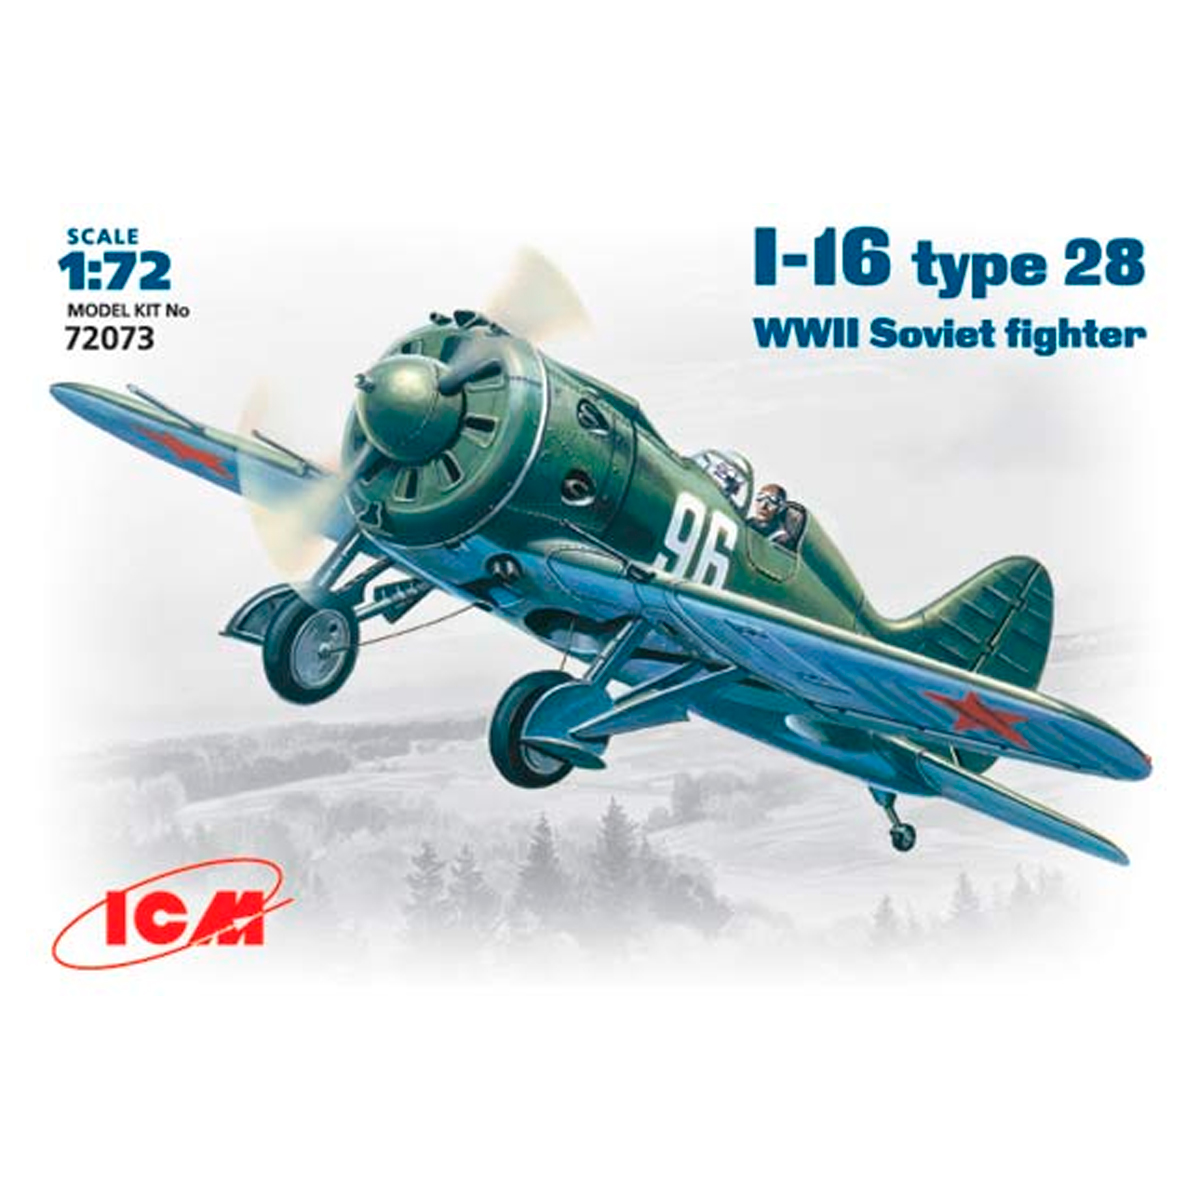 I-16 type 28, WWII Soviet Fighter 1/72